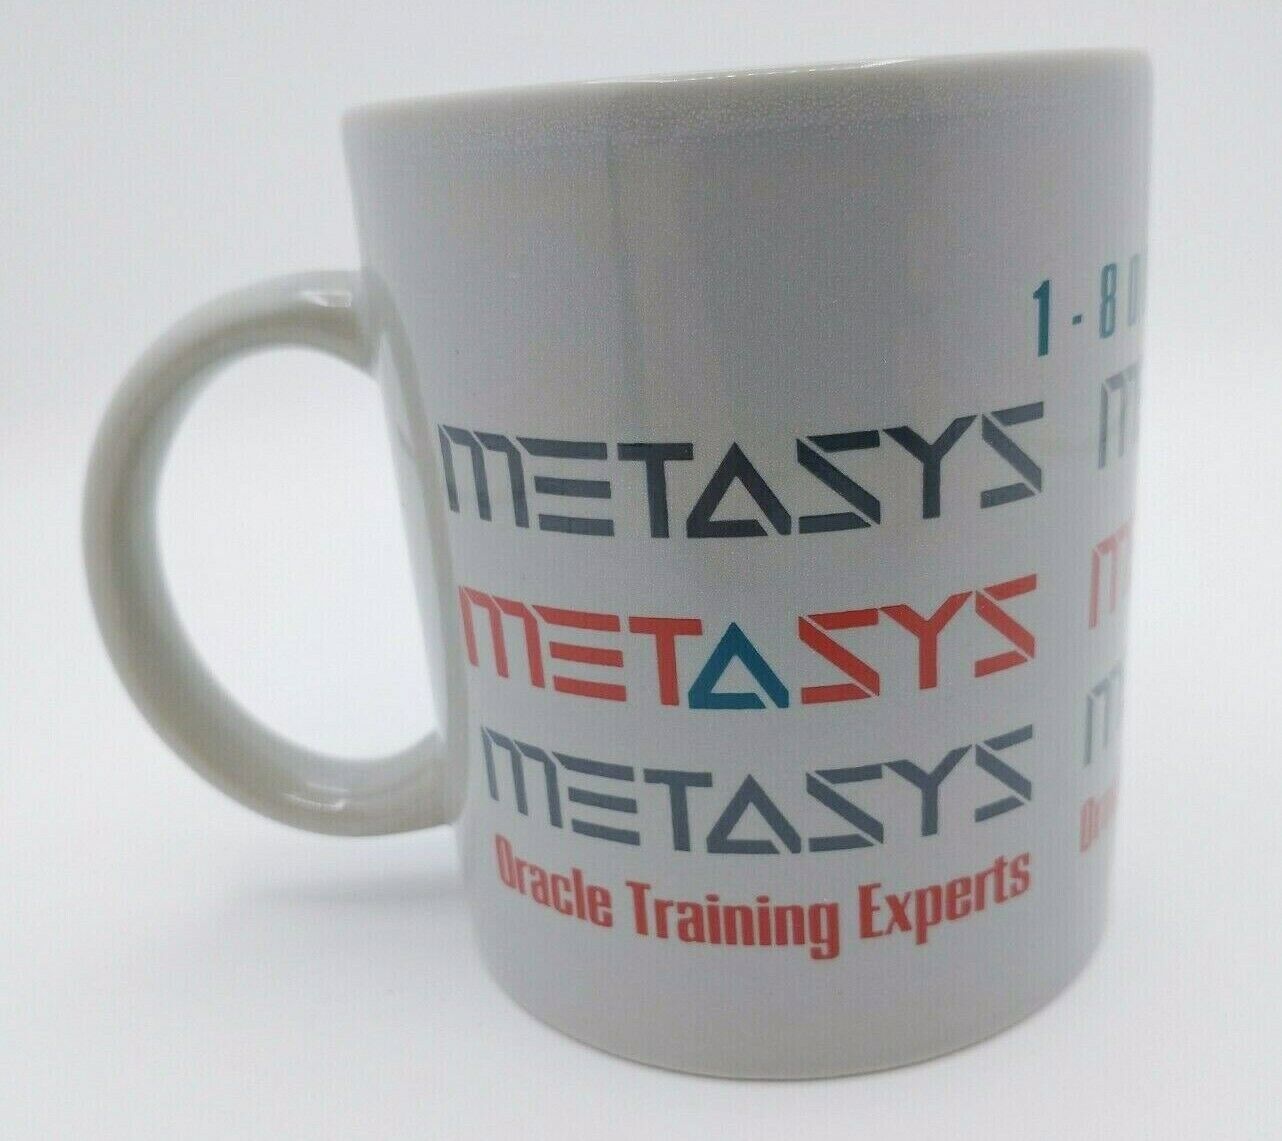 Metasys Oracle Training Experts Coffee Mug Cup, Gray w/ Handle, Tech Memorabilia